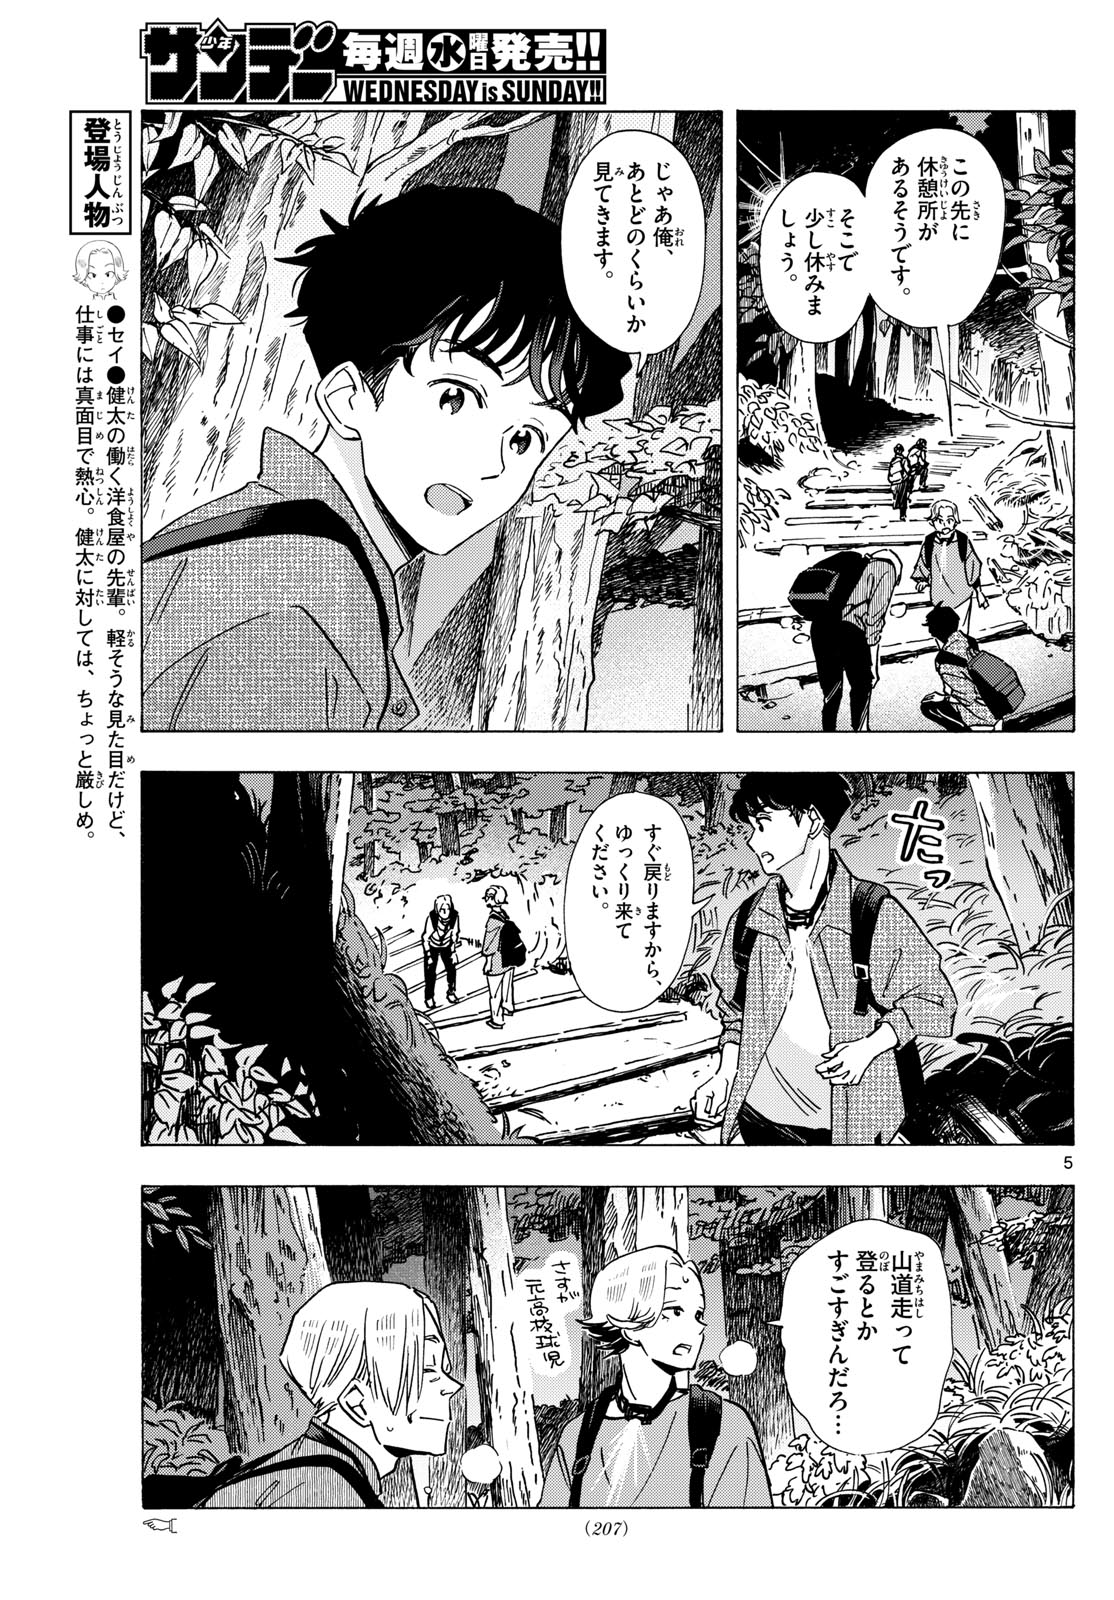 Maiko-san Chi no Makanai-san - Chapter 295 - Page 5